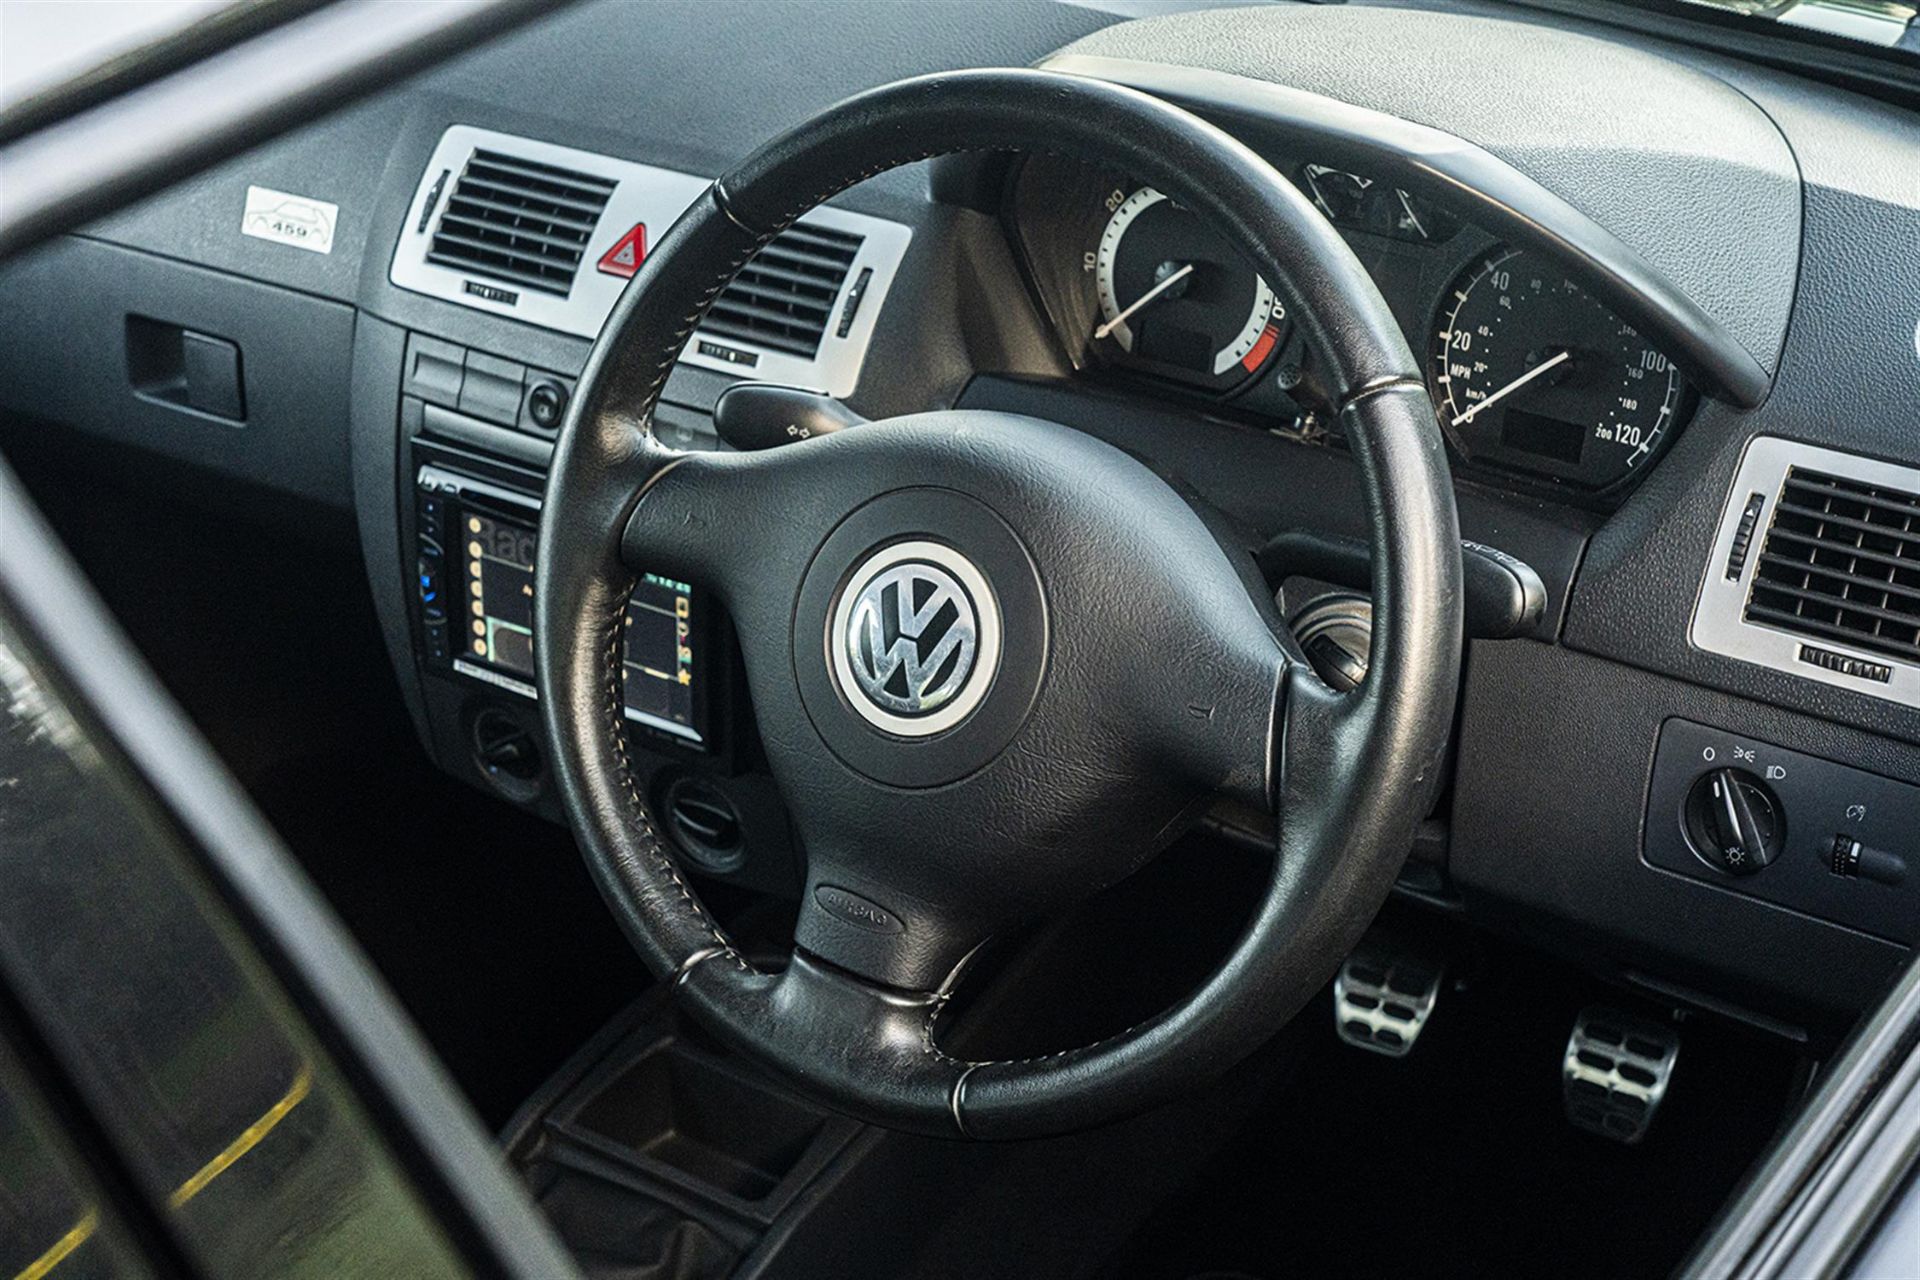 2009 Volkswagen Citi Golf Mk1 Limited Edition - No. 459/1000 - Image 2 of 10